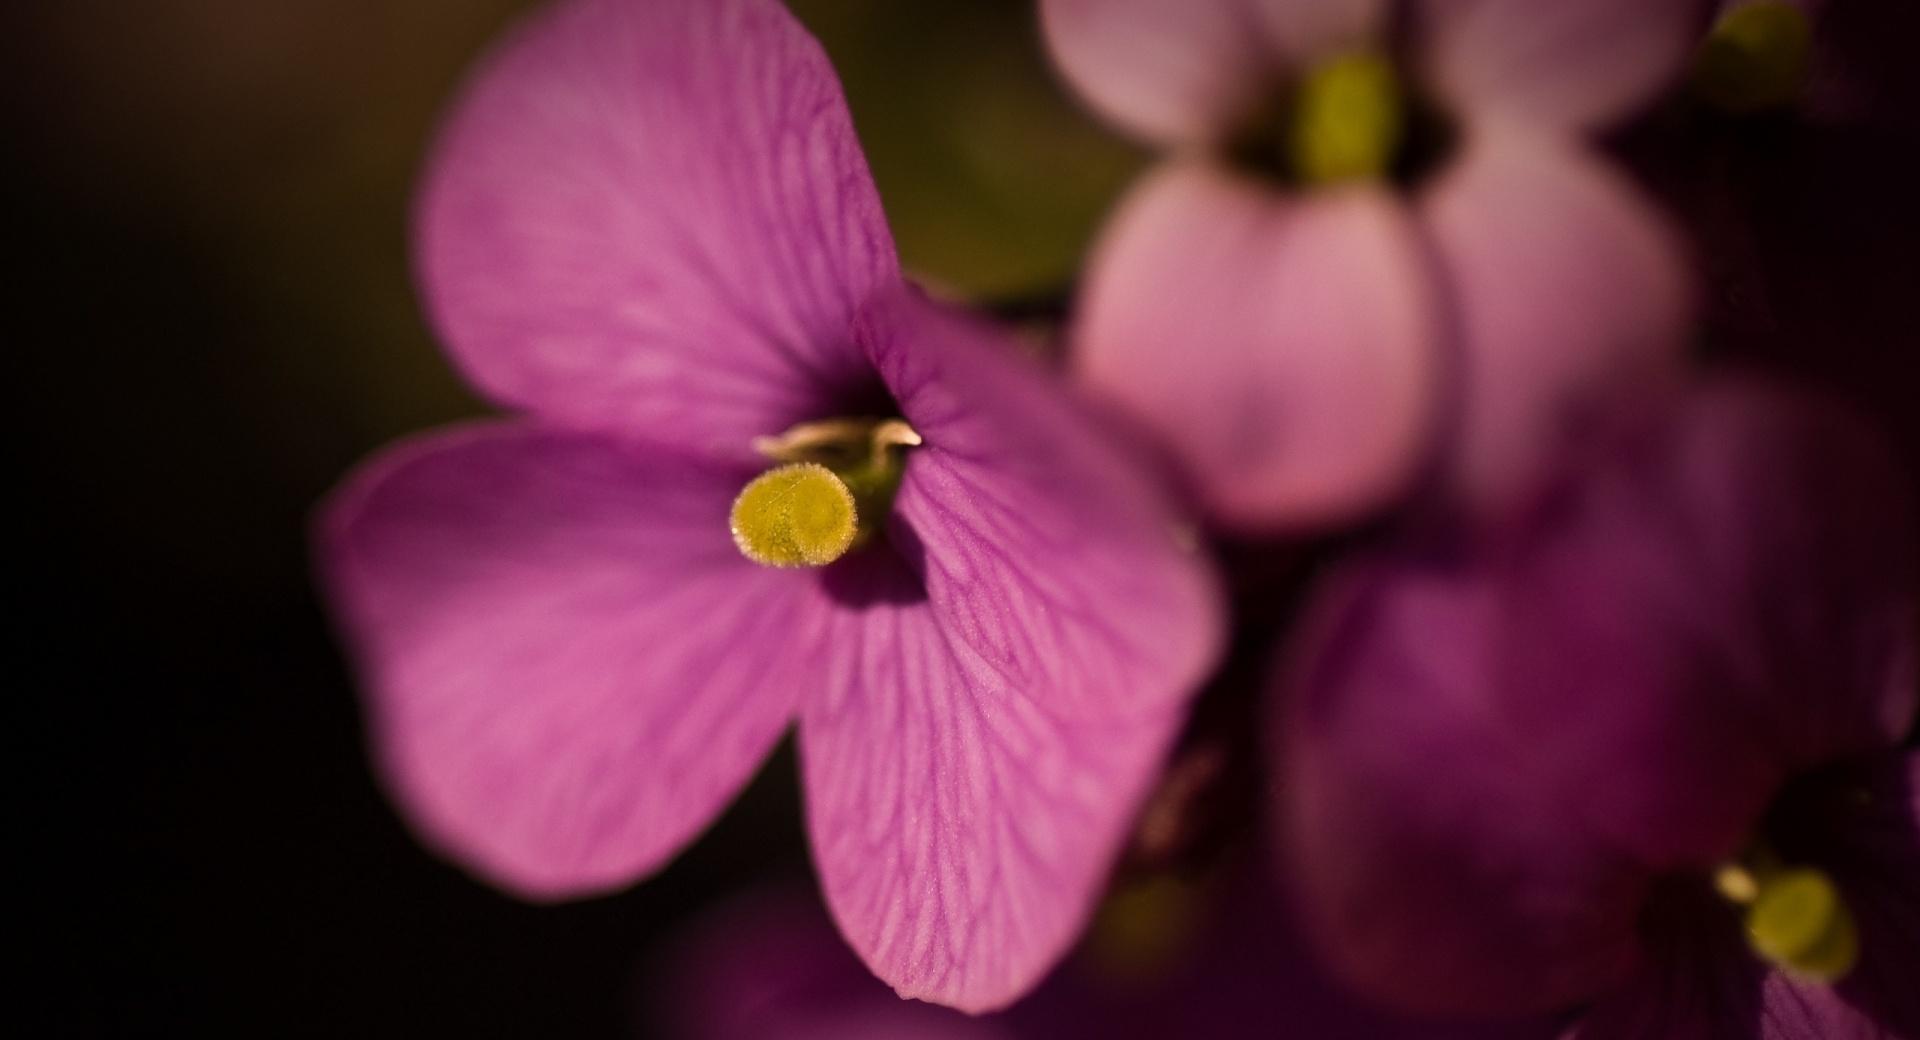 Purple Flowers Macro at 1024 x 1024 iPad size wallpapers HD quality